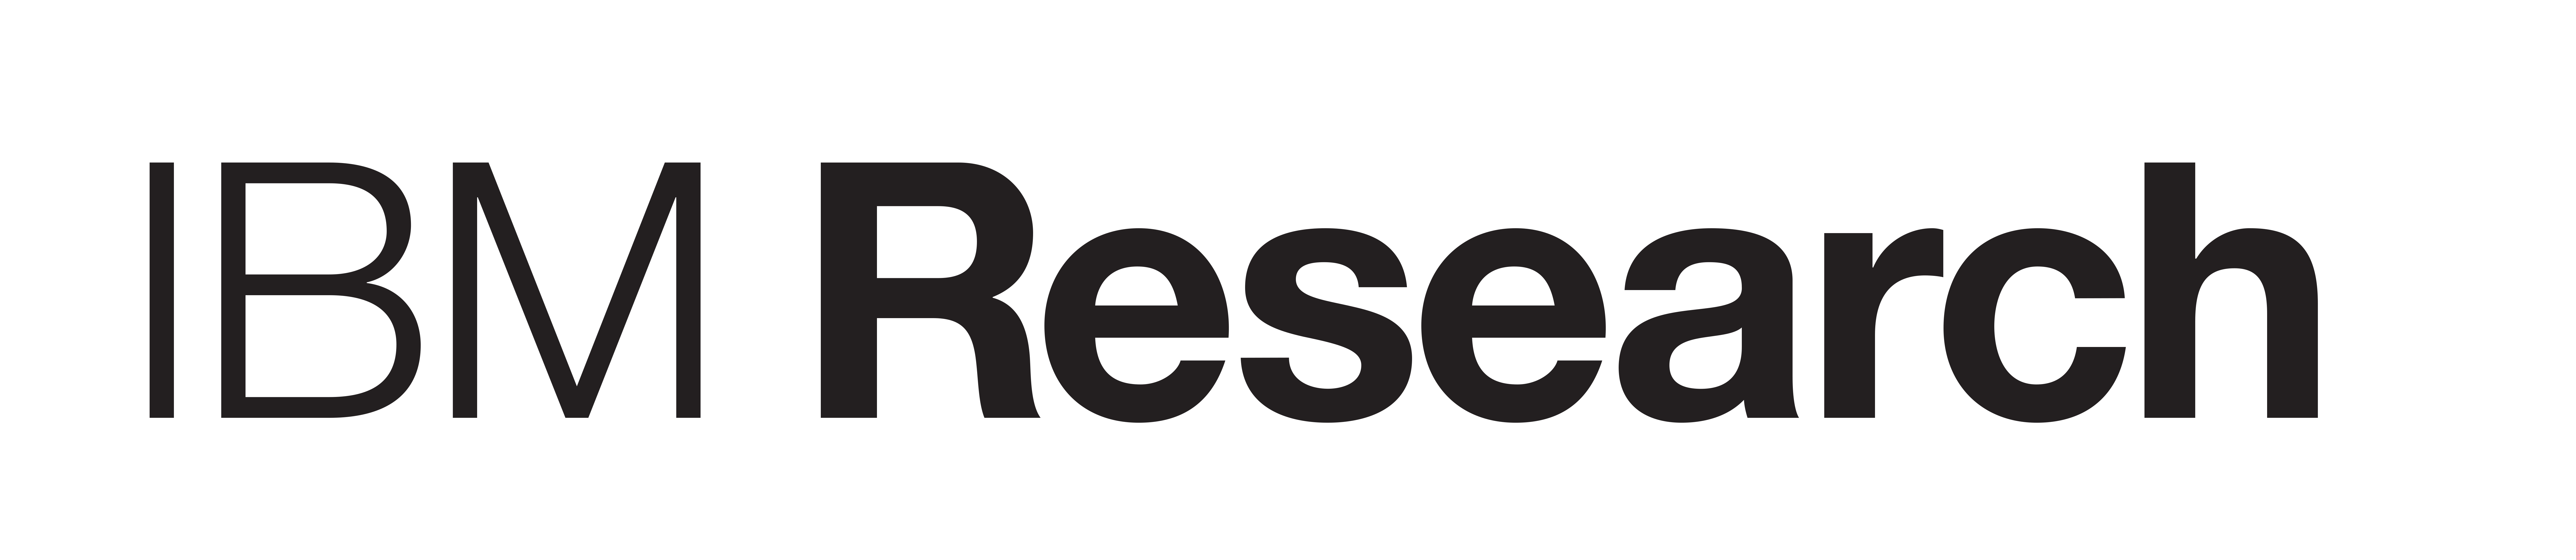 IBM Research logo